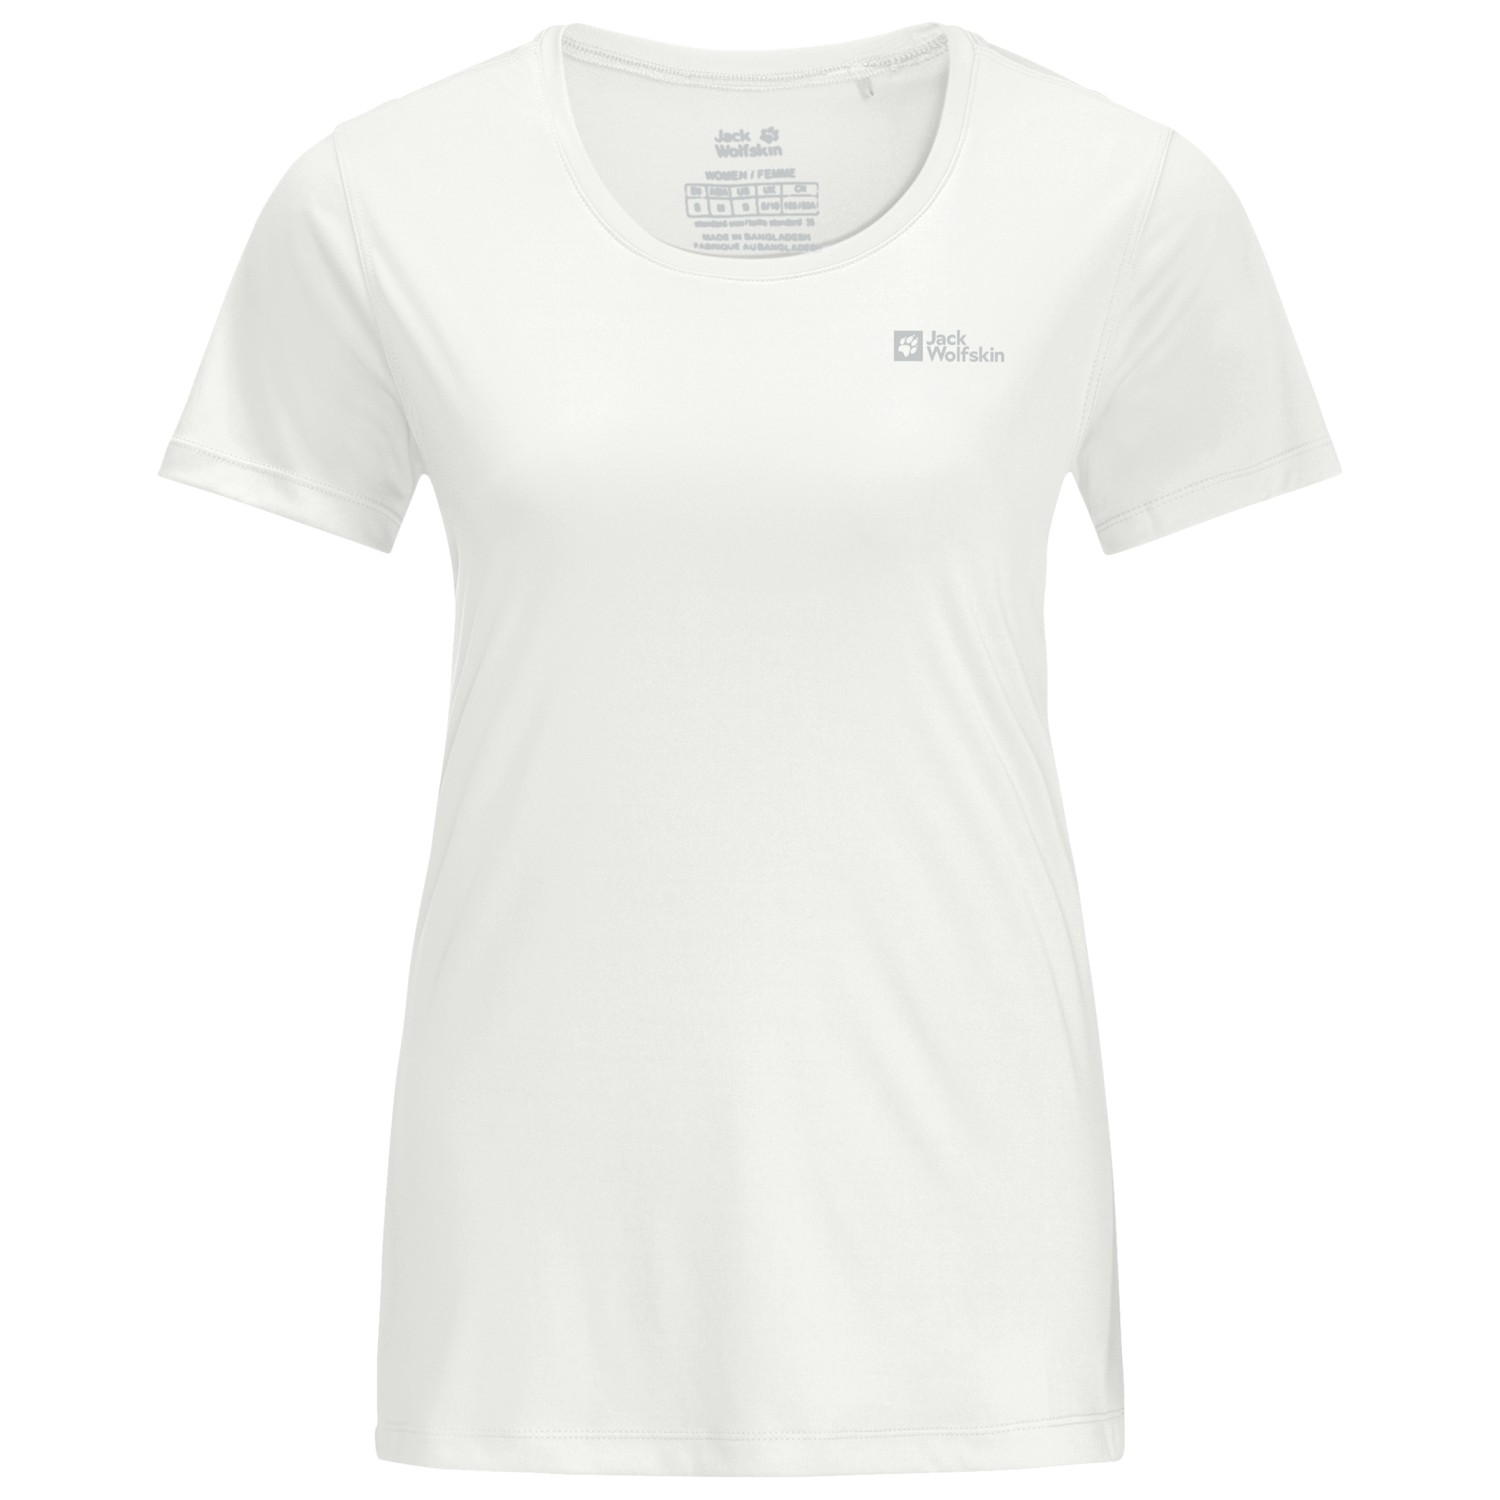 Функциональная рубашка Jack Wolfskin Women's Tech Tee, цвет Stark White